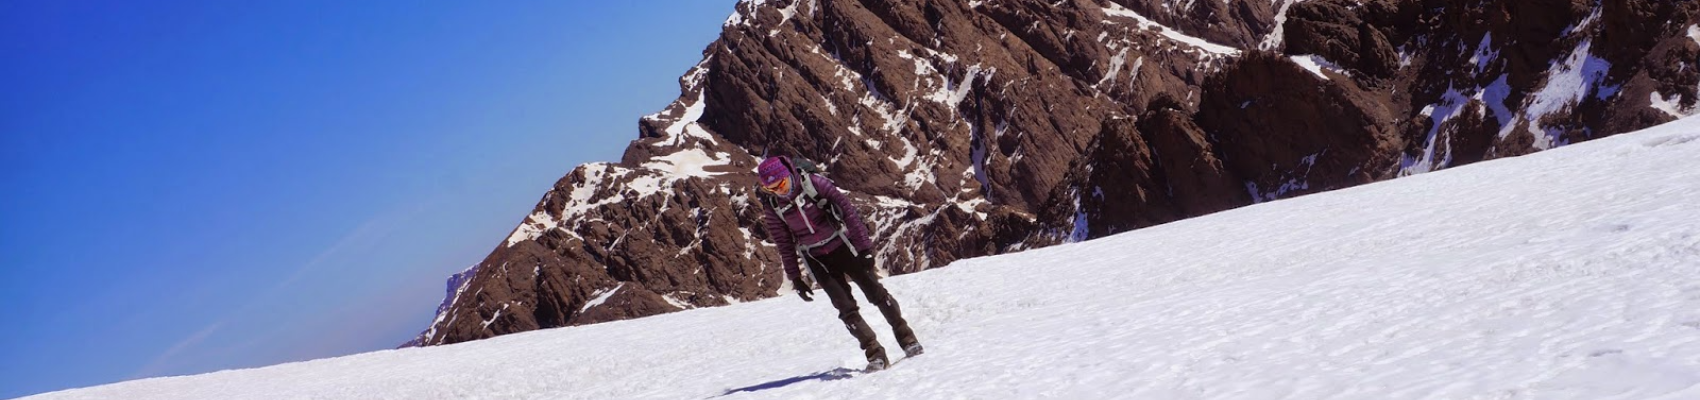 Atlas Mountains skiing – 6 Days Adventure